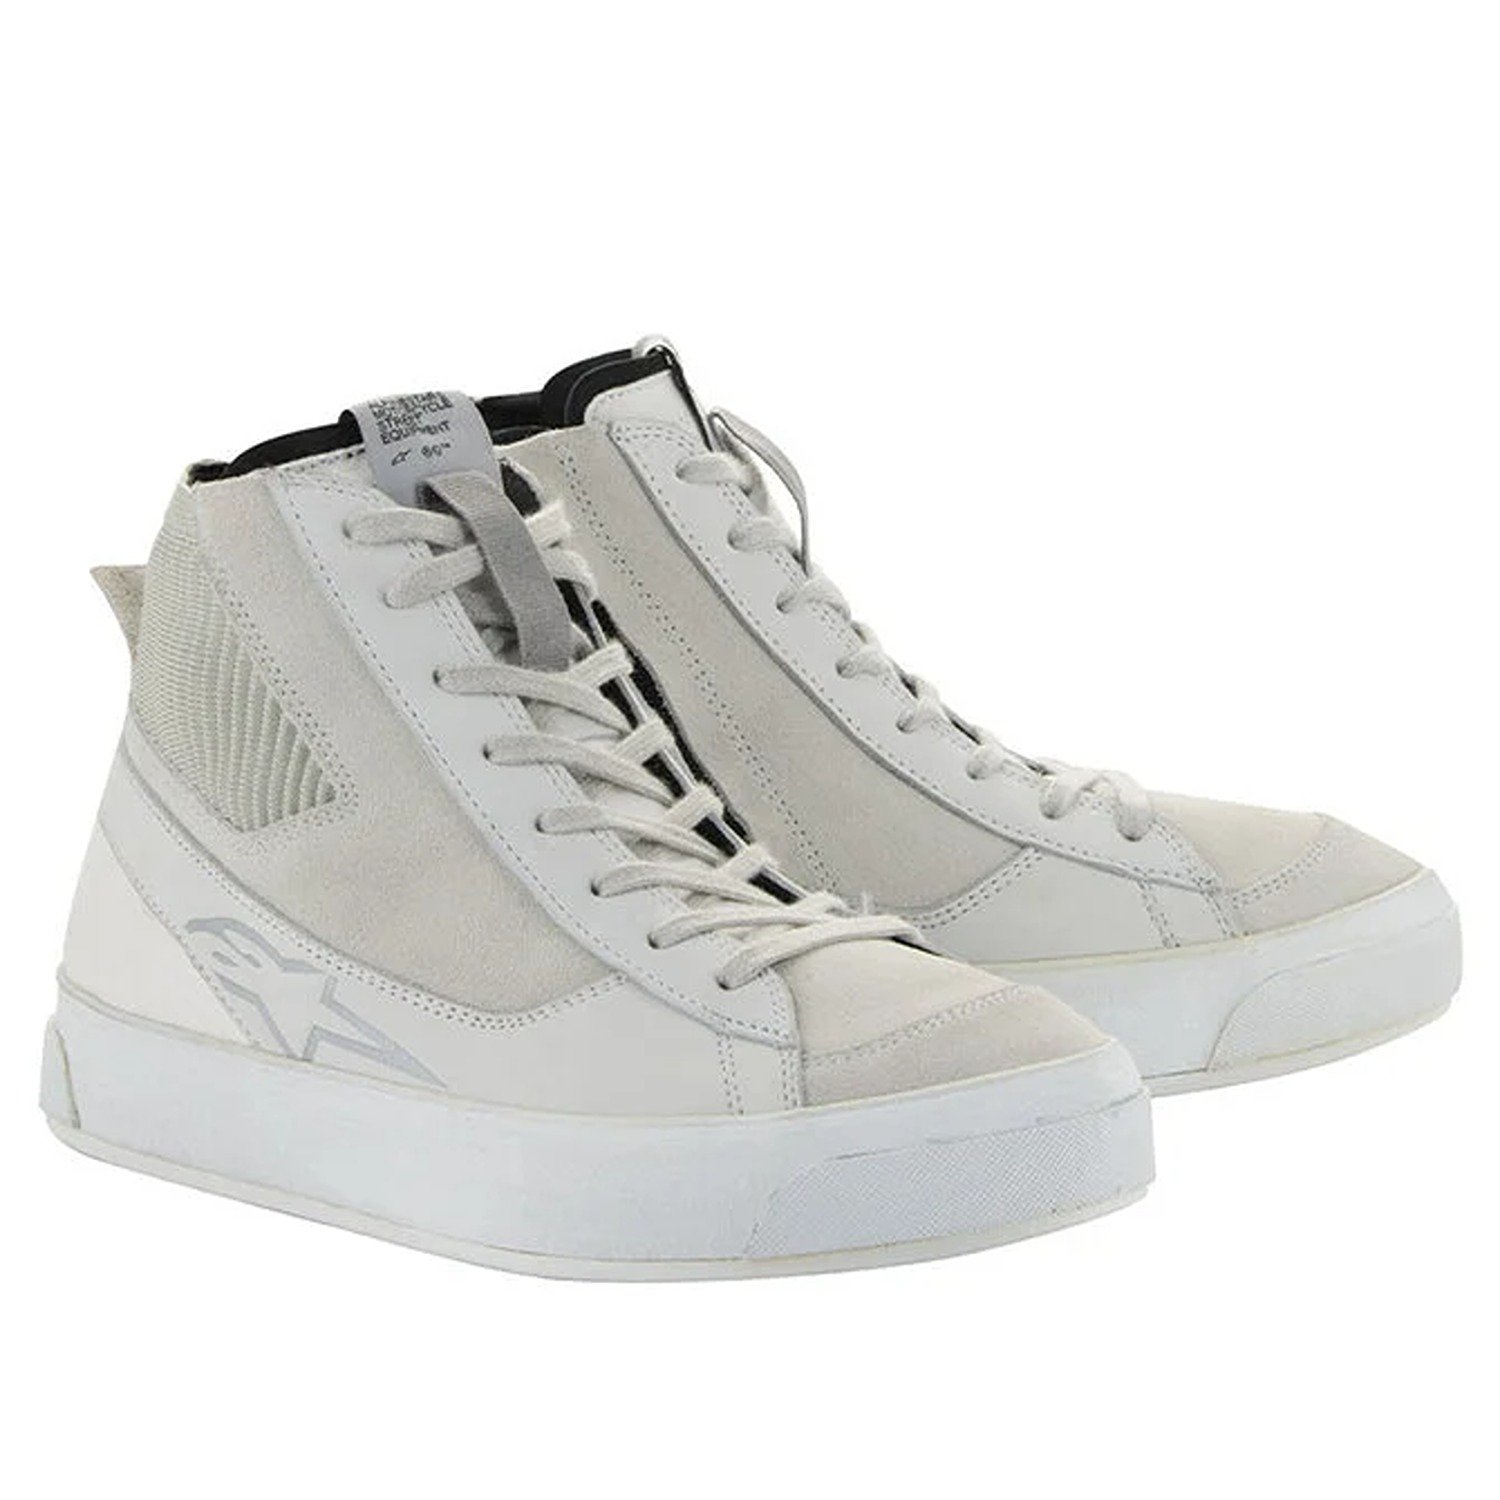 Image of Alpinestars Stella Stated Podium Shoes White Cool Gray Size US 115 ID 8059347350219